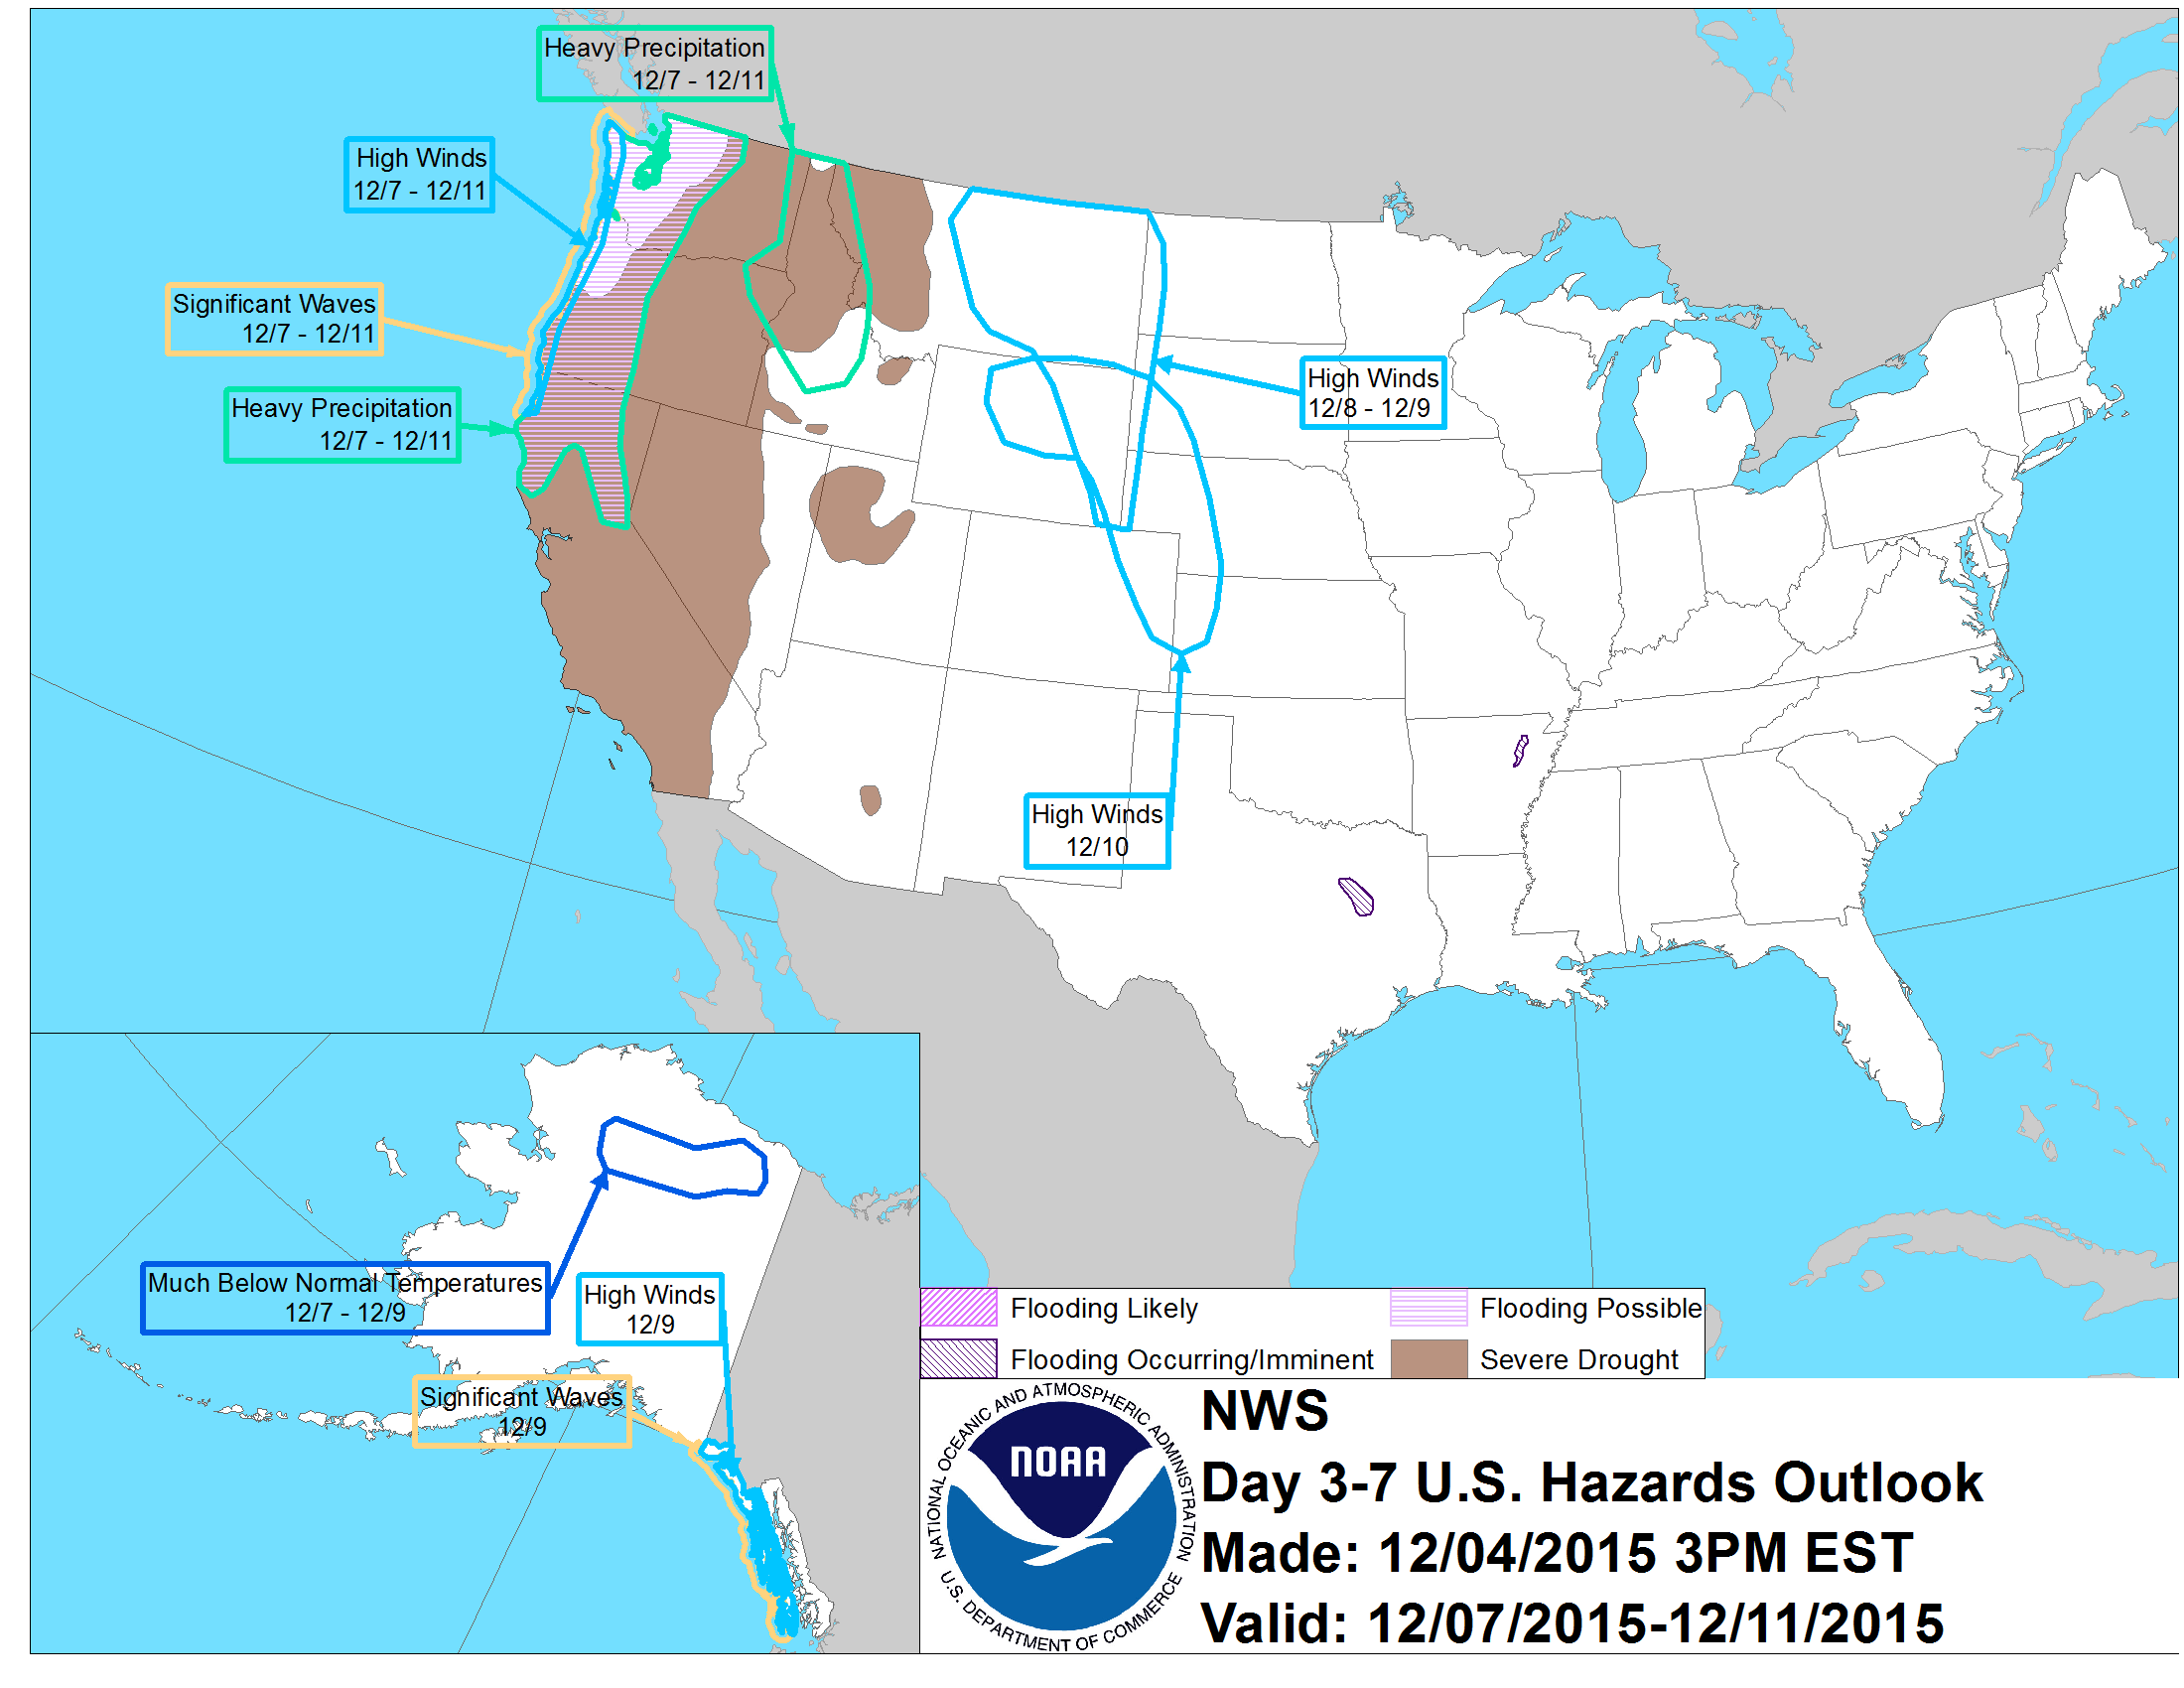 NOAA's 3-7 day forecast showing "Heavy Precipitation" in Tahoe.